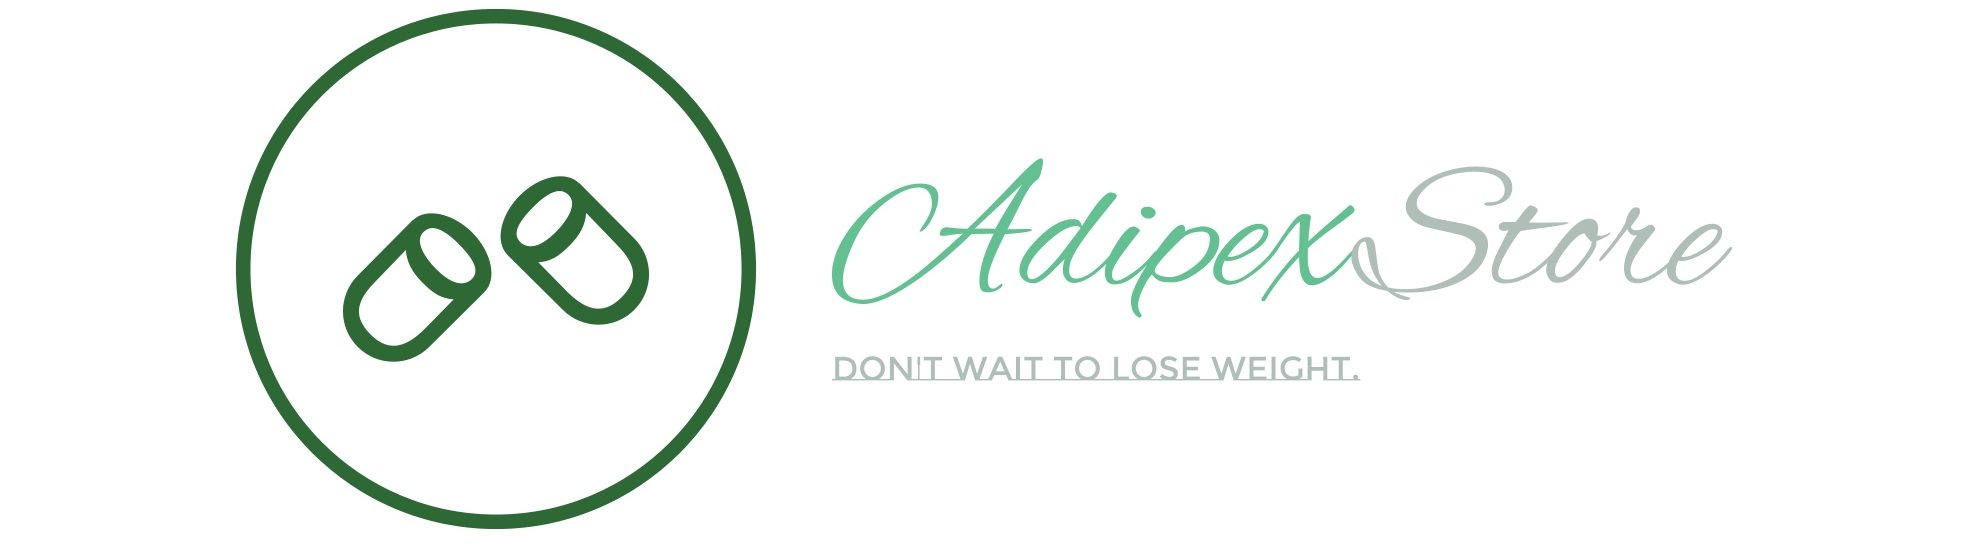 buy adipex online